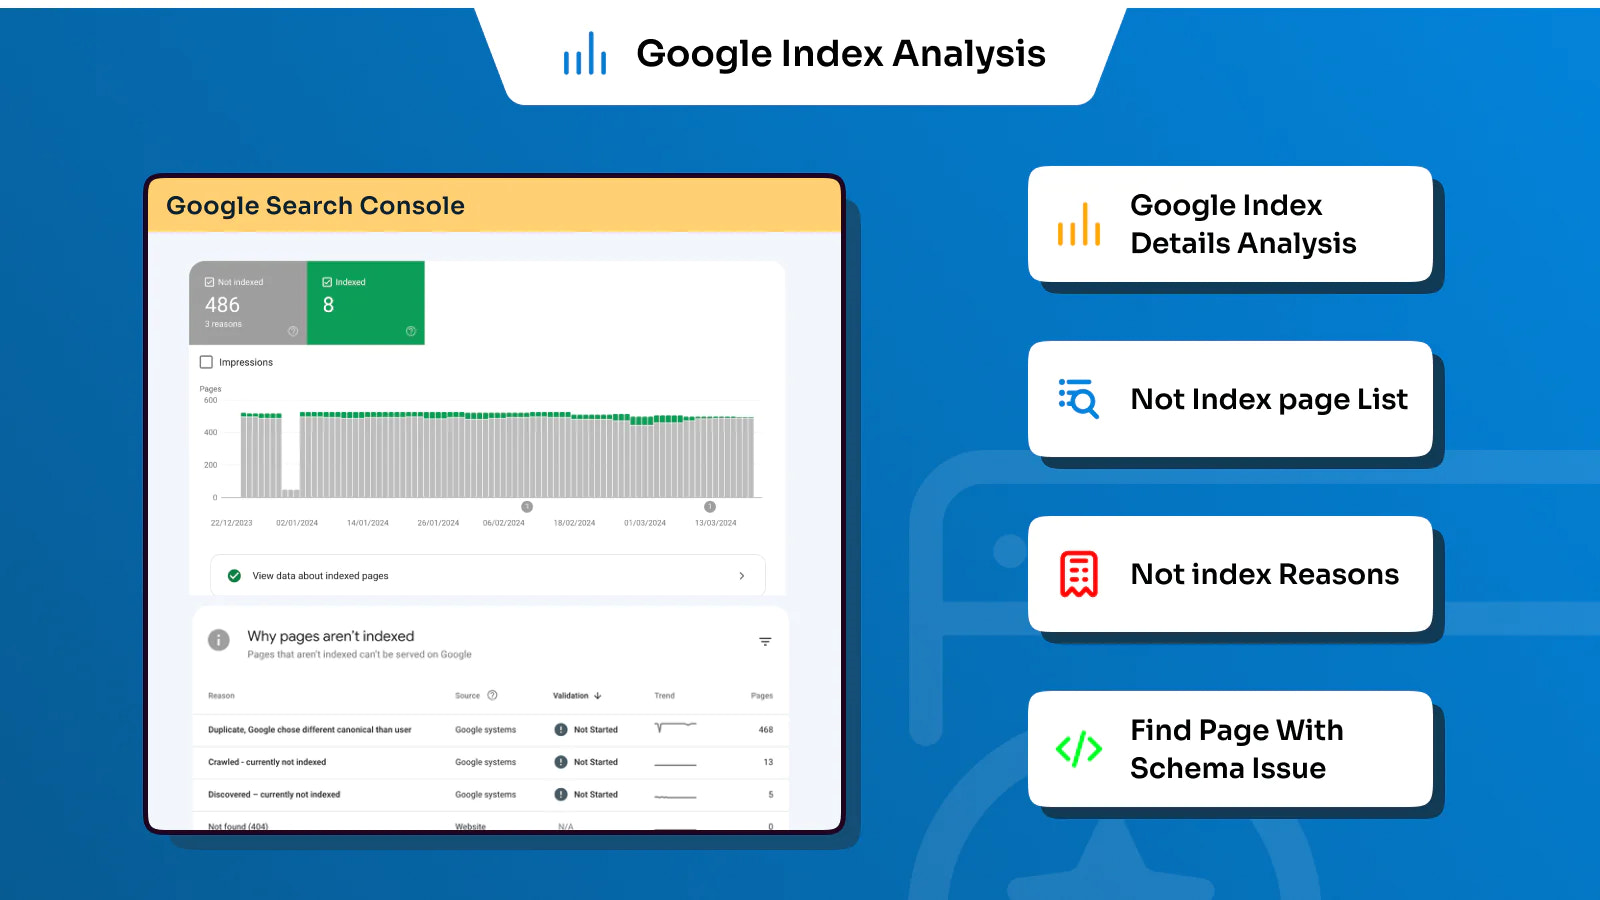 Google Index Analys